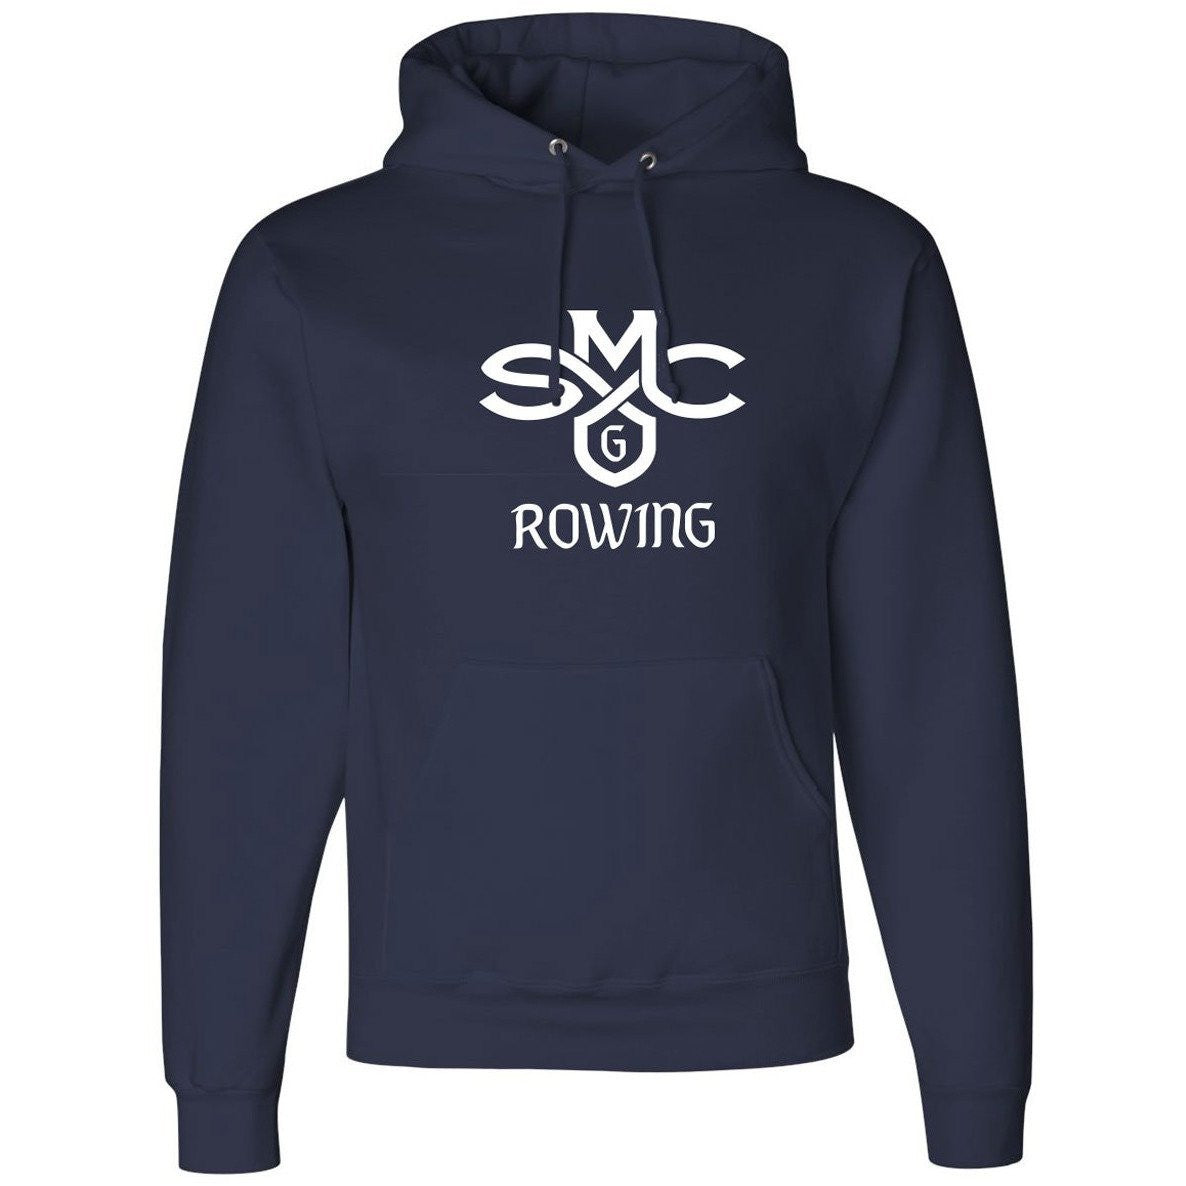 50/50 Hooded Saint Mary's Rowing Pullover Sweatshirt